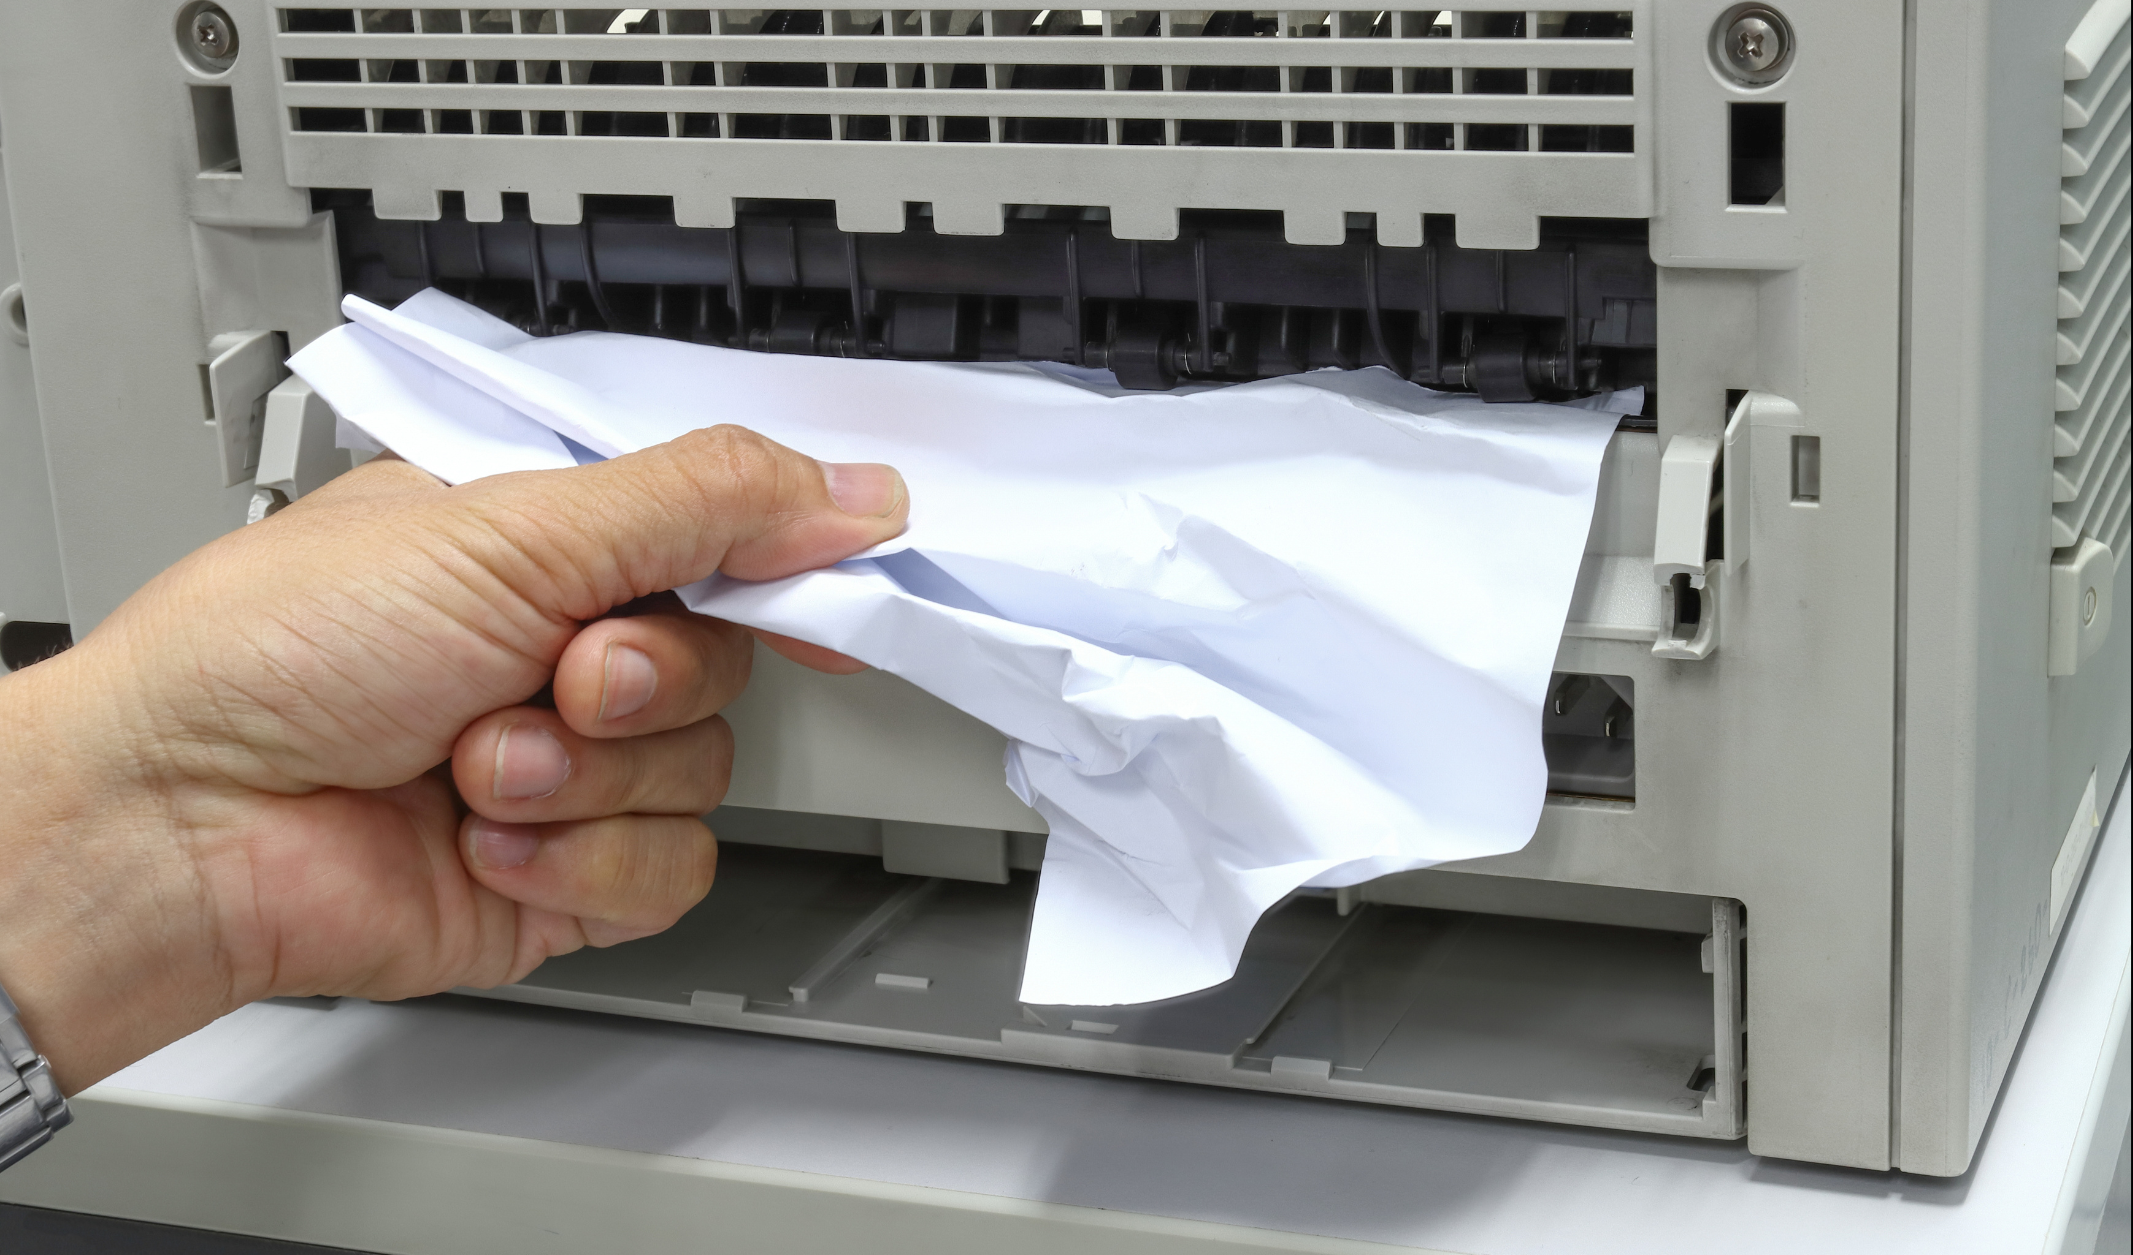 EPSON Printer Paper Jam Issue Repair At Guru Computer Solution